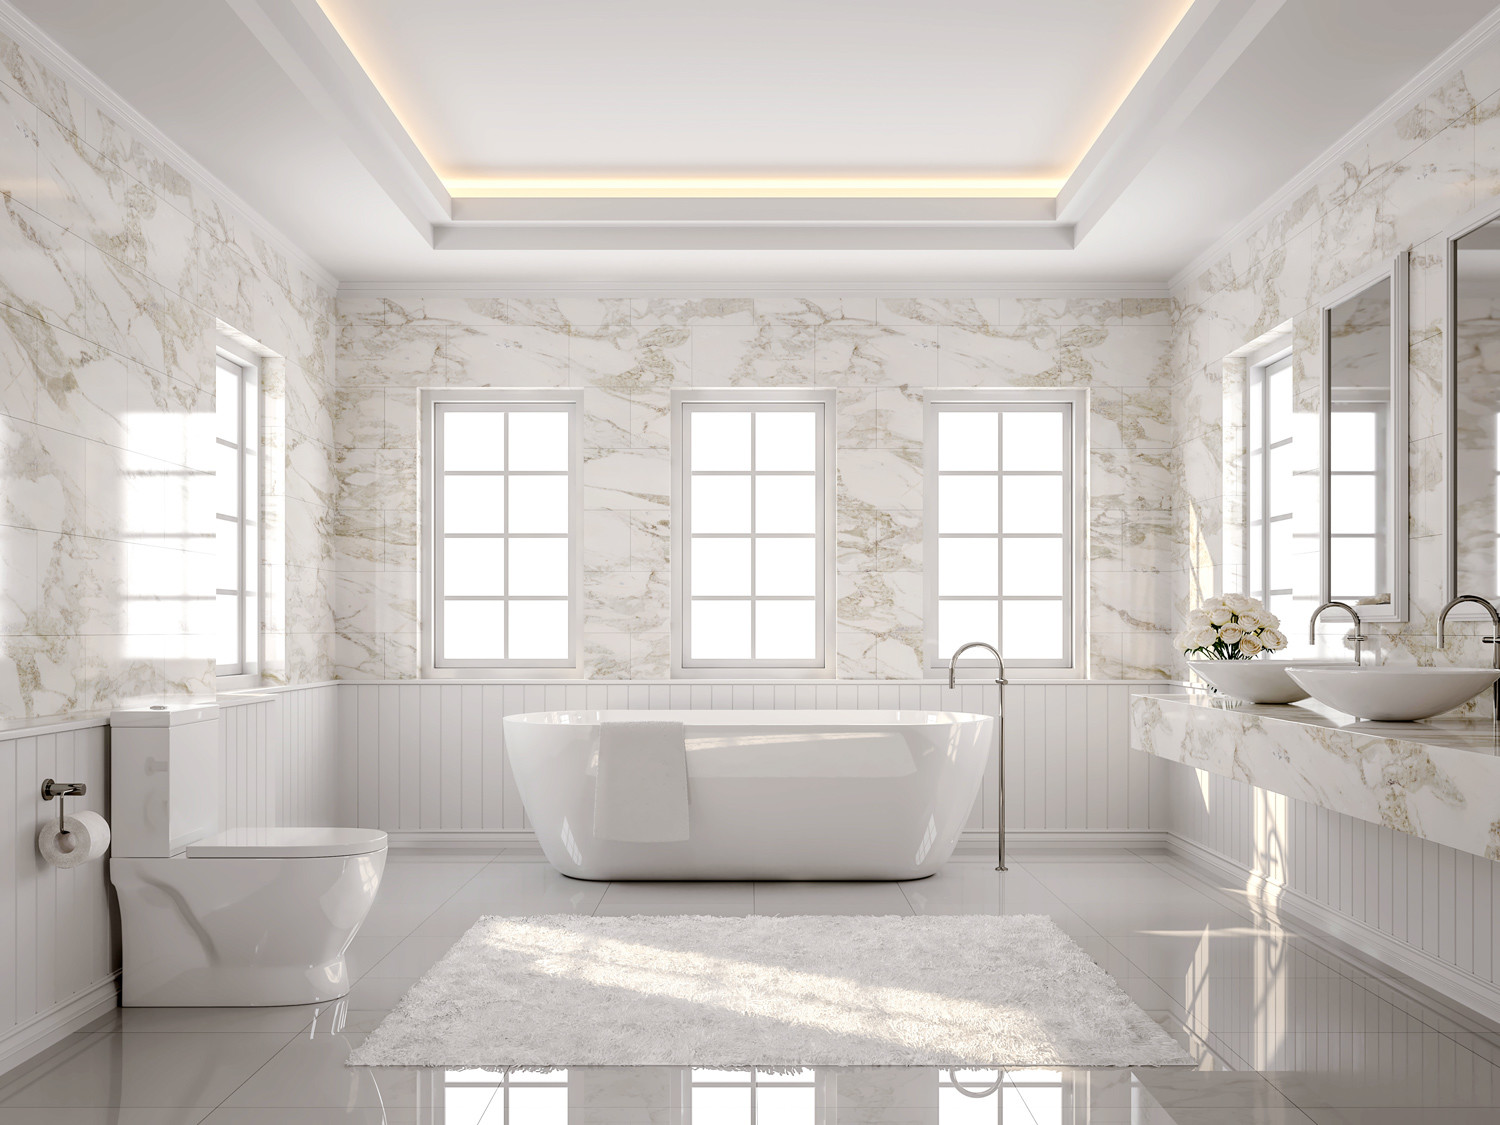 Top 10 Inspiring Bathroom Tile Trends For 2020 Westside Tile Stone,Writing Jobs Online